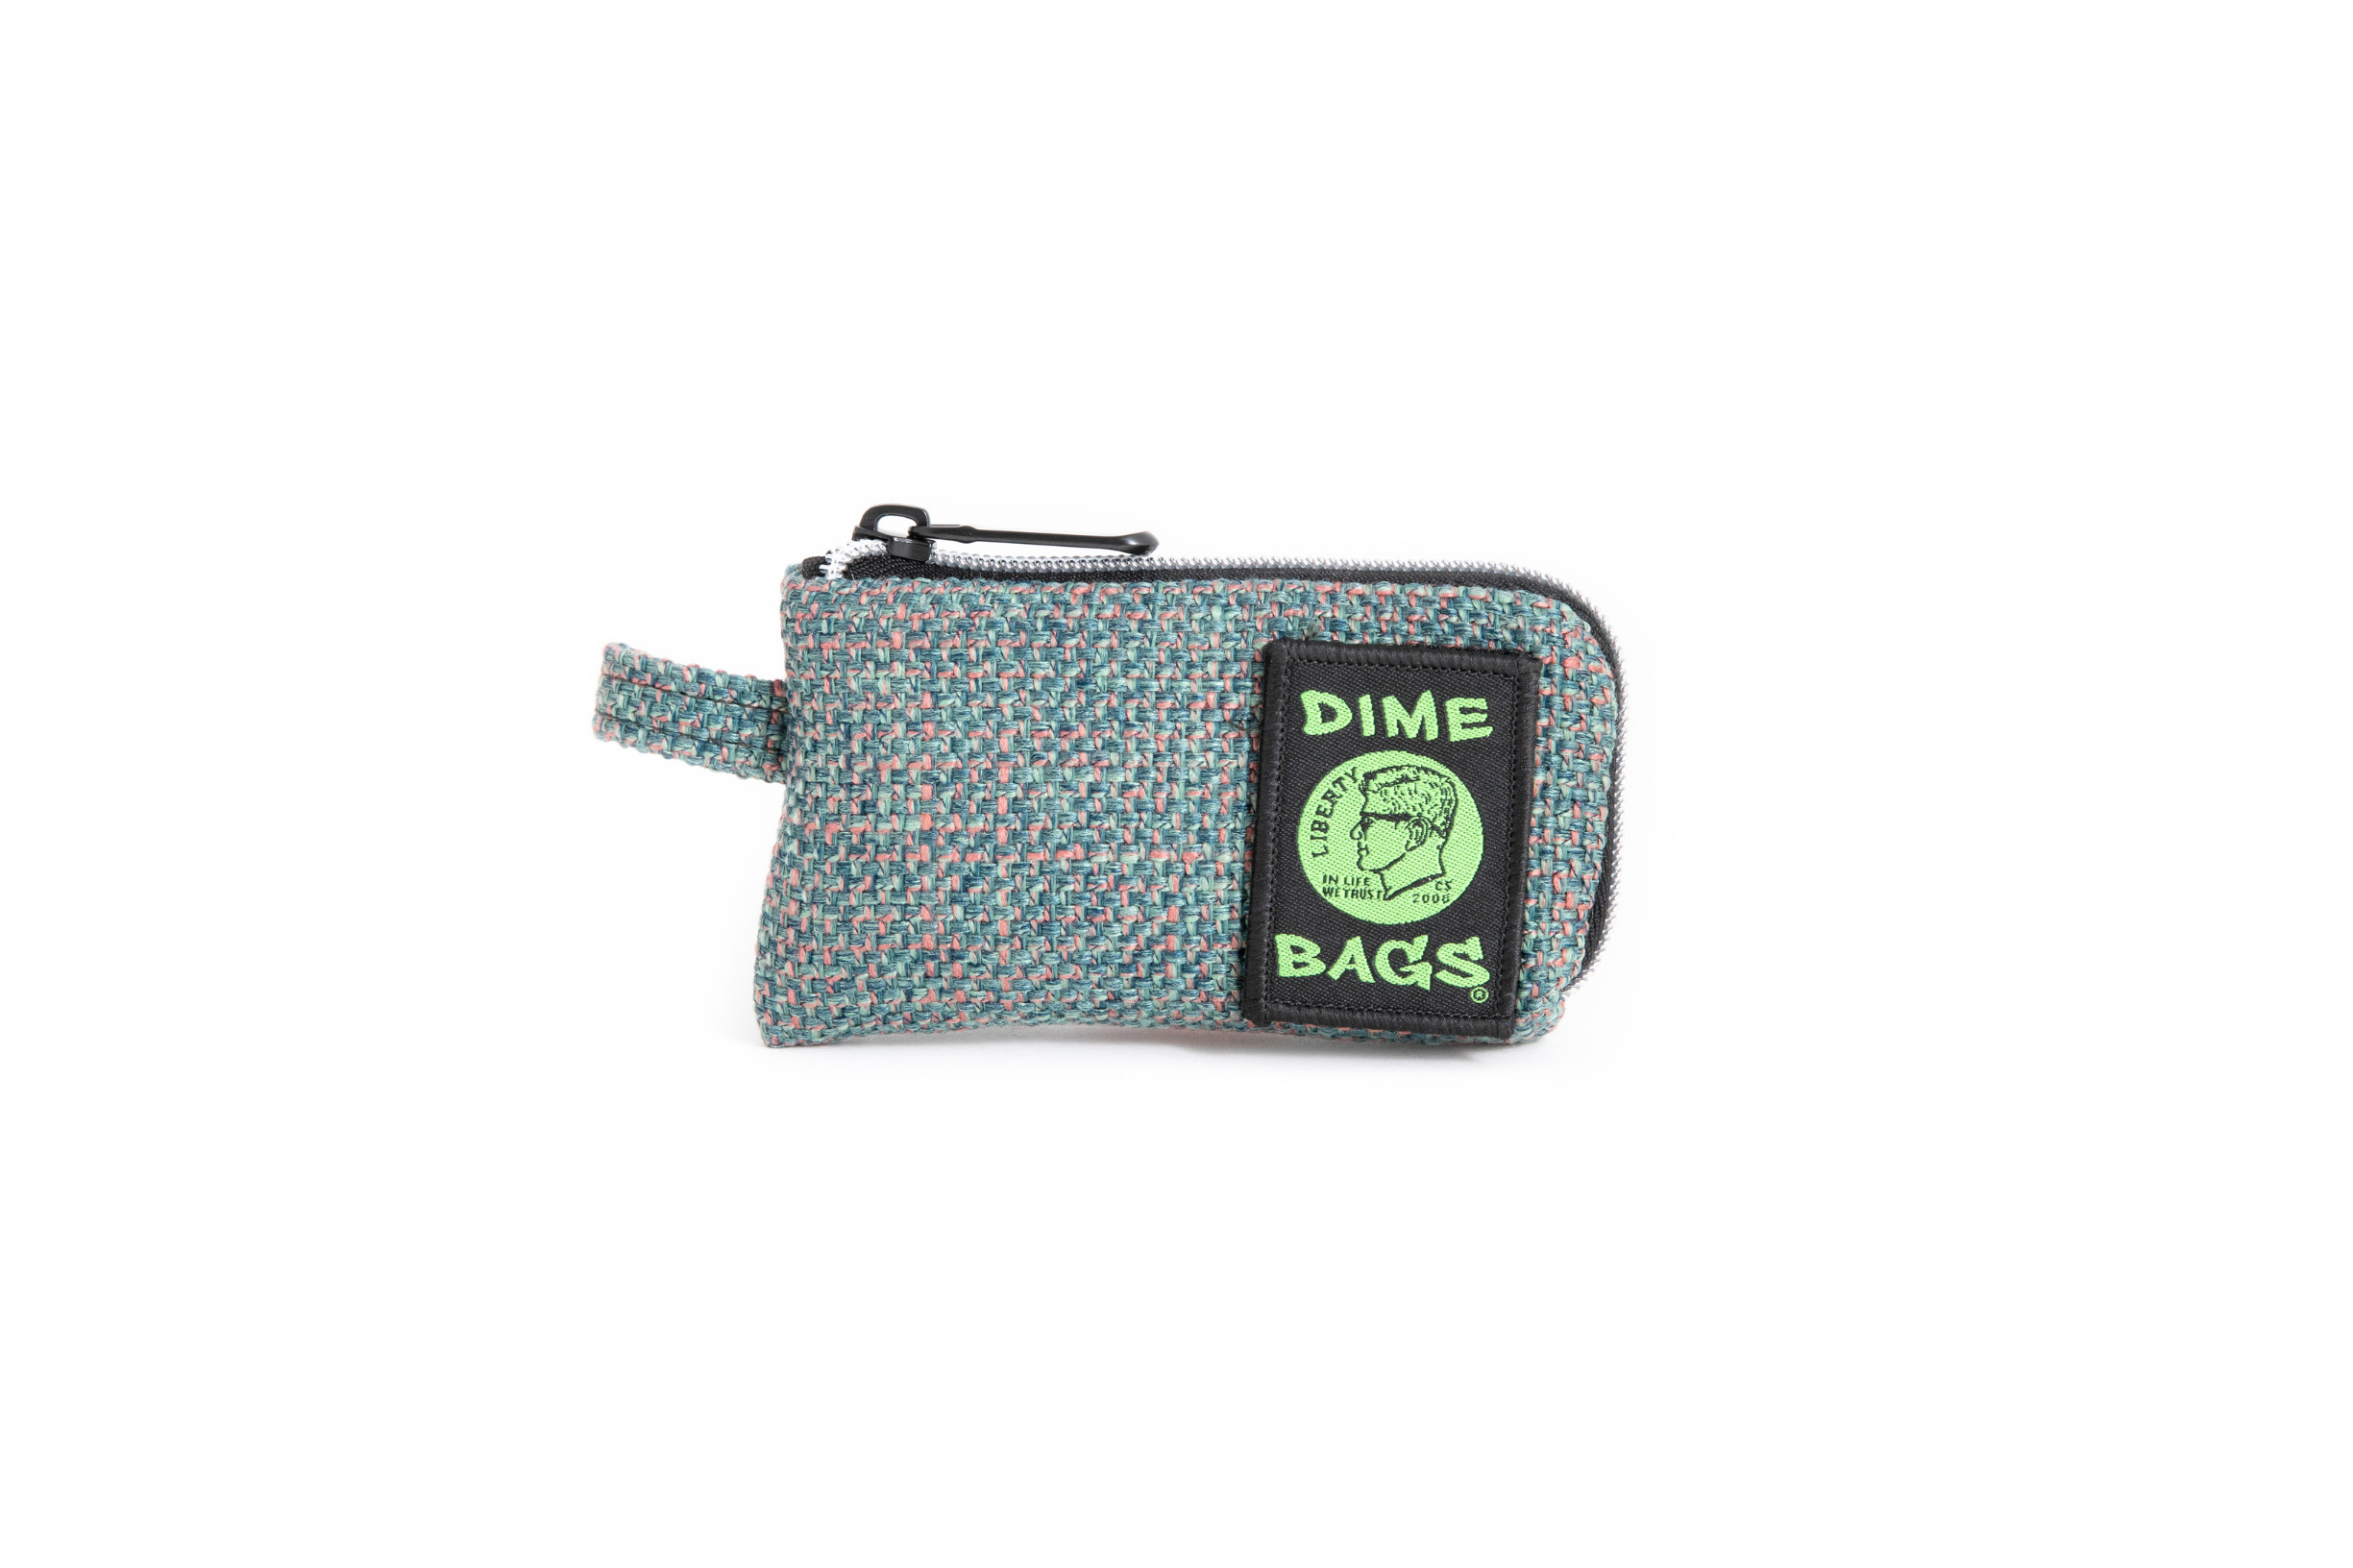 $125 - SMELLPROOF Backpack-Lockable Travel bag - Dimebags Omerta